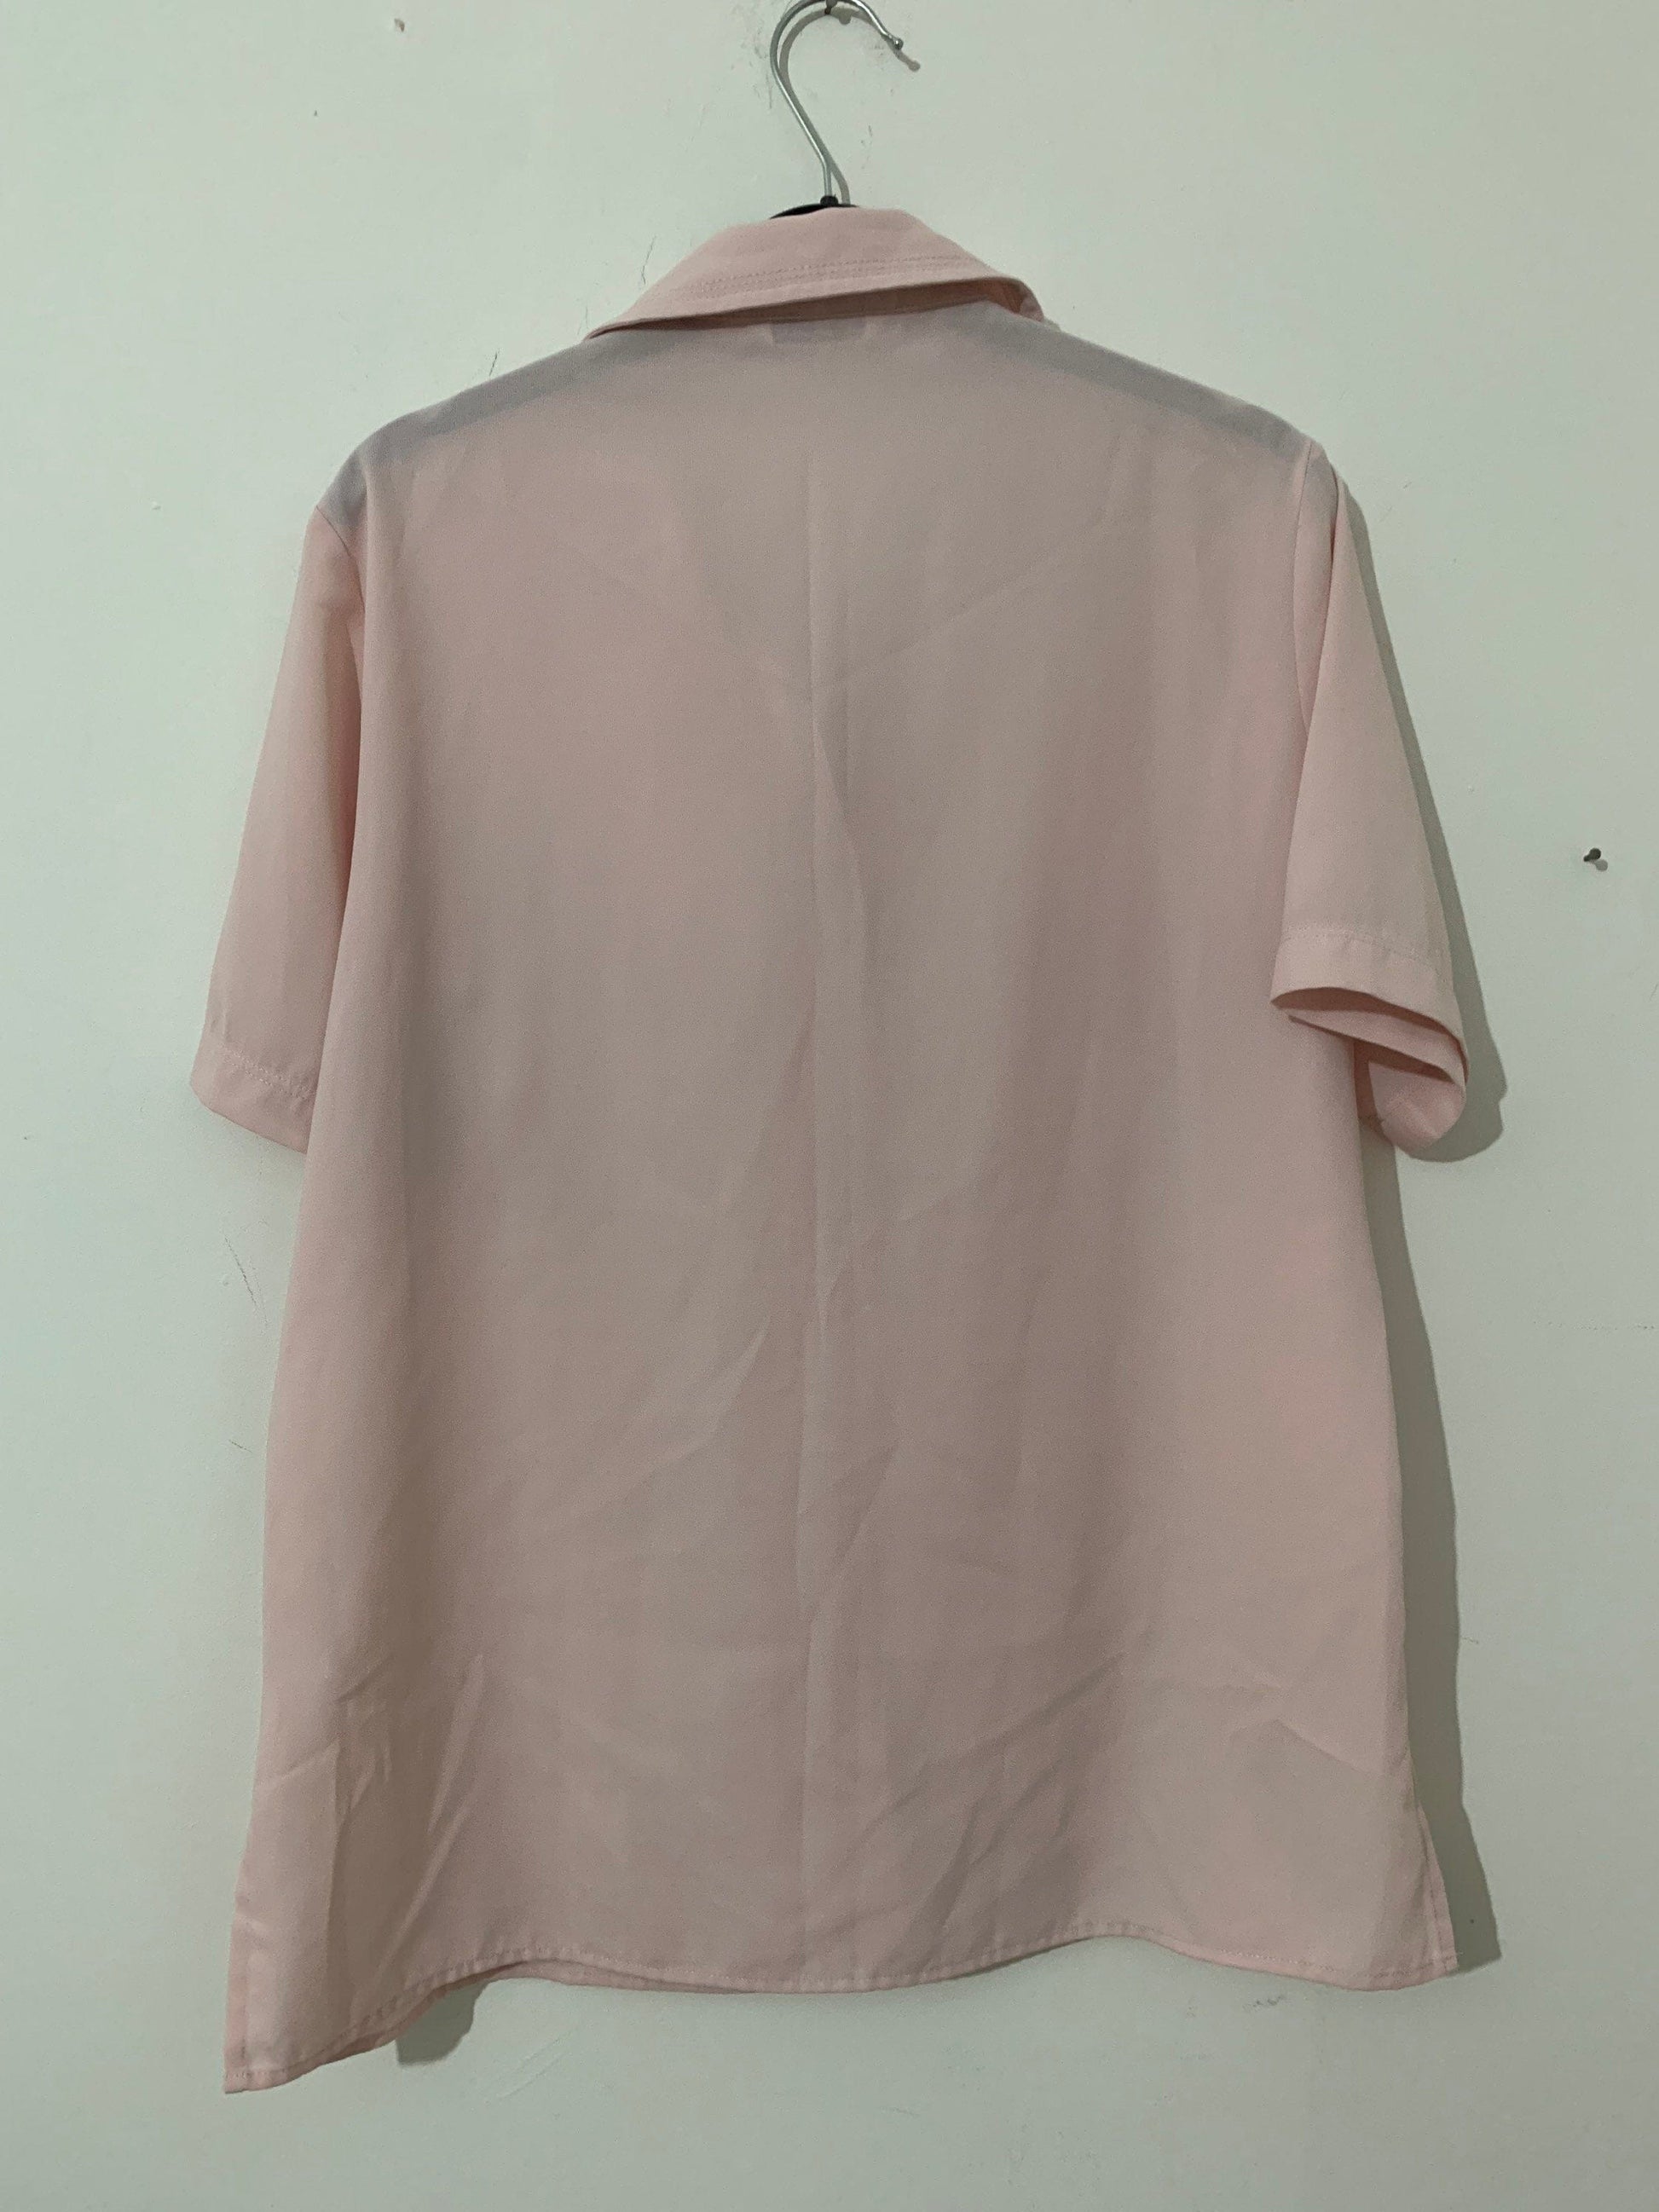 Pink Vintage Blouse Semi Sheer Button Through Boxy short Sleeves - Size 14 - Berketex